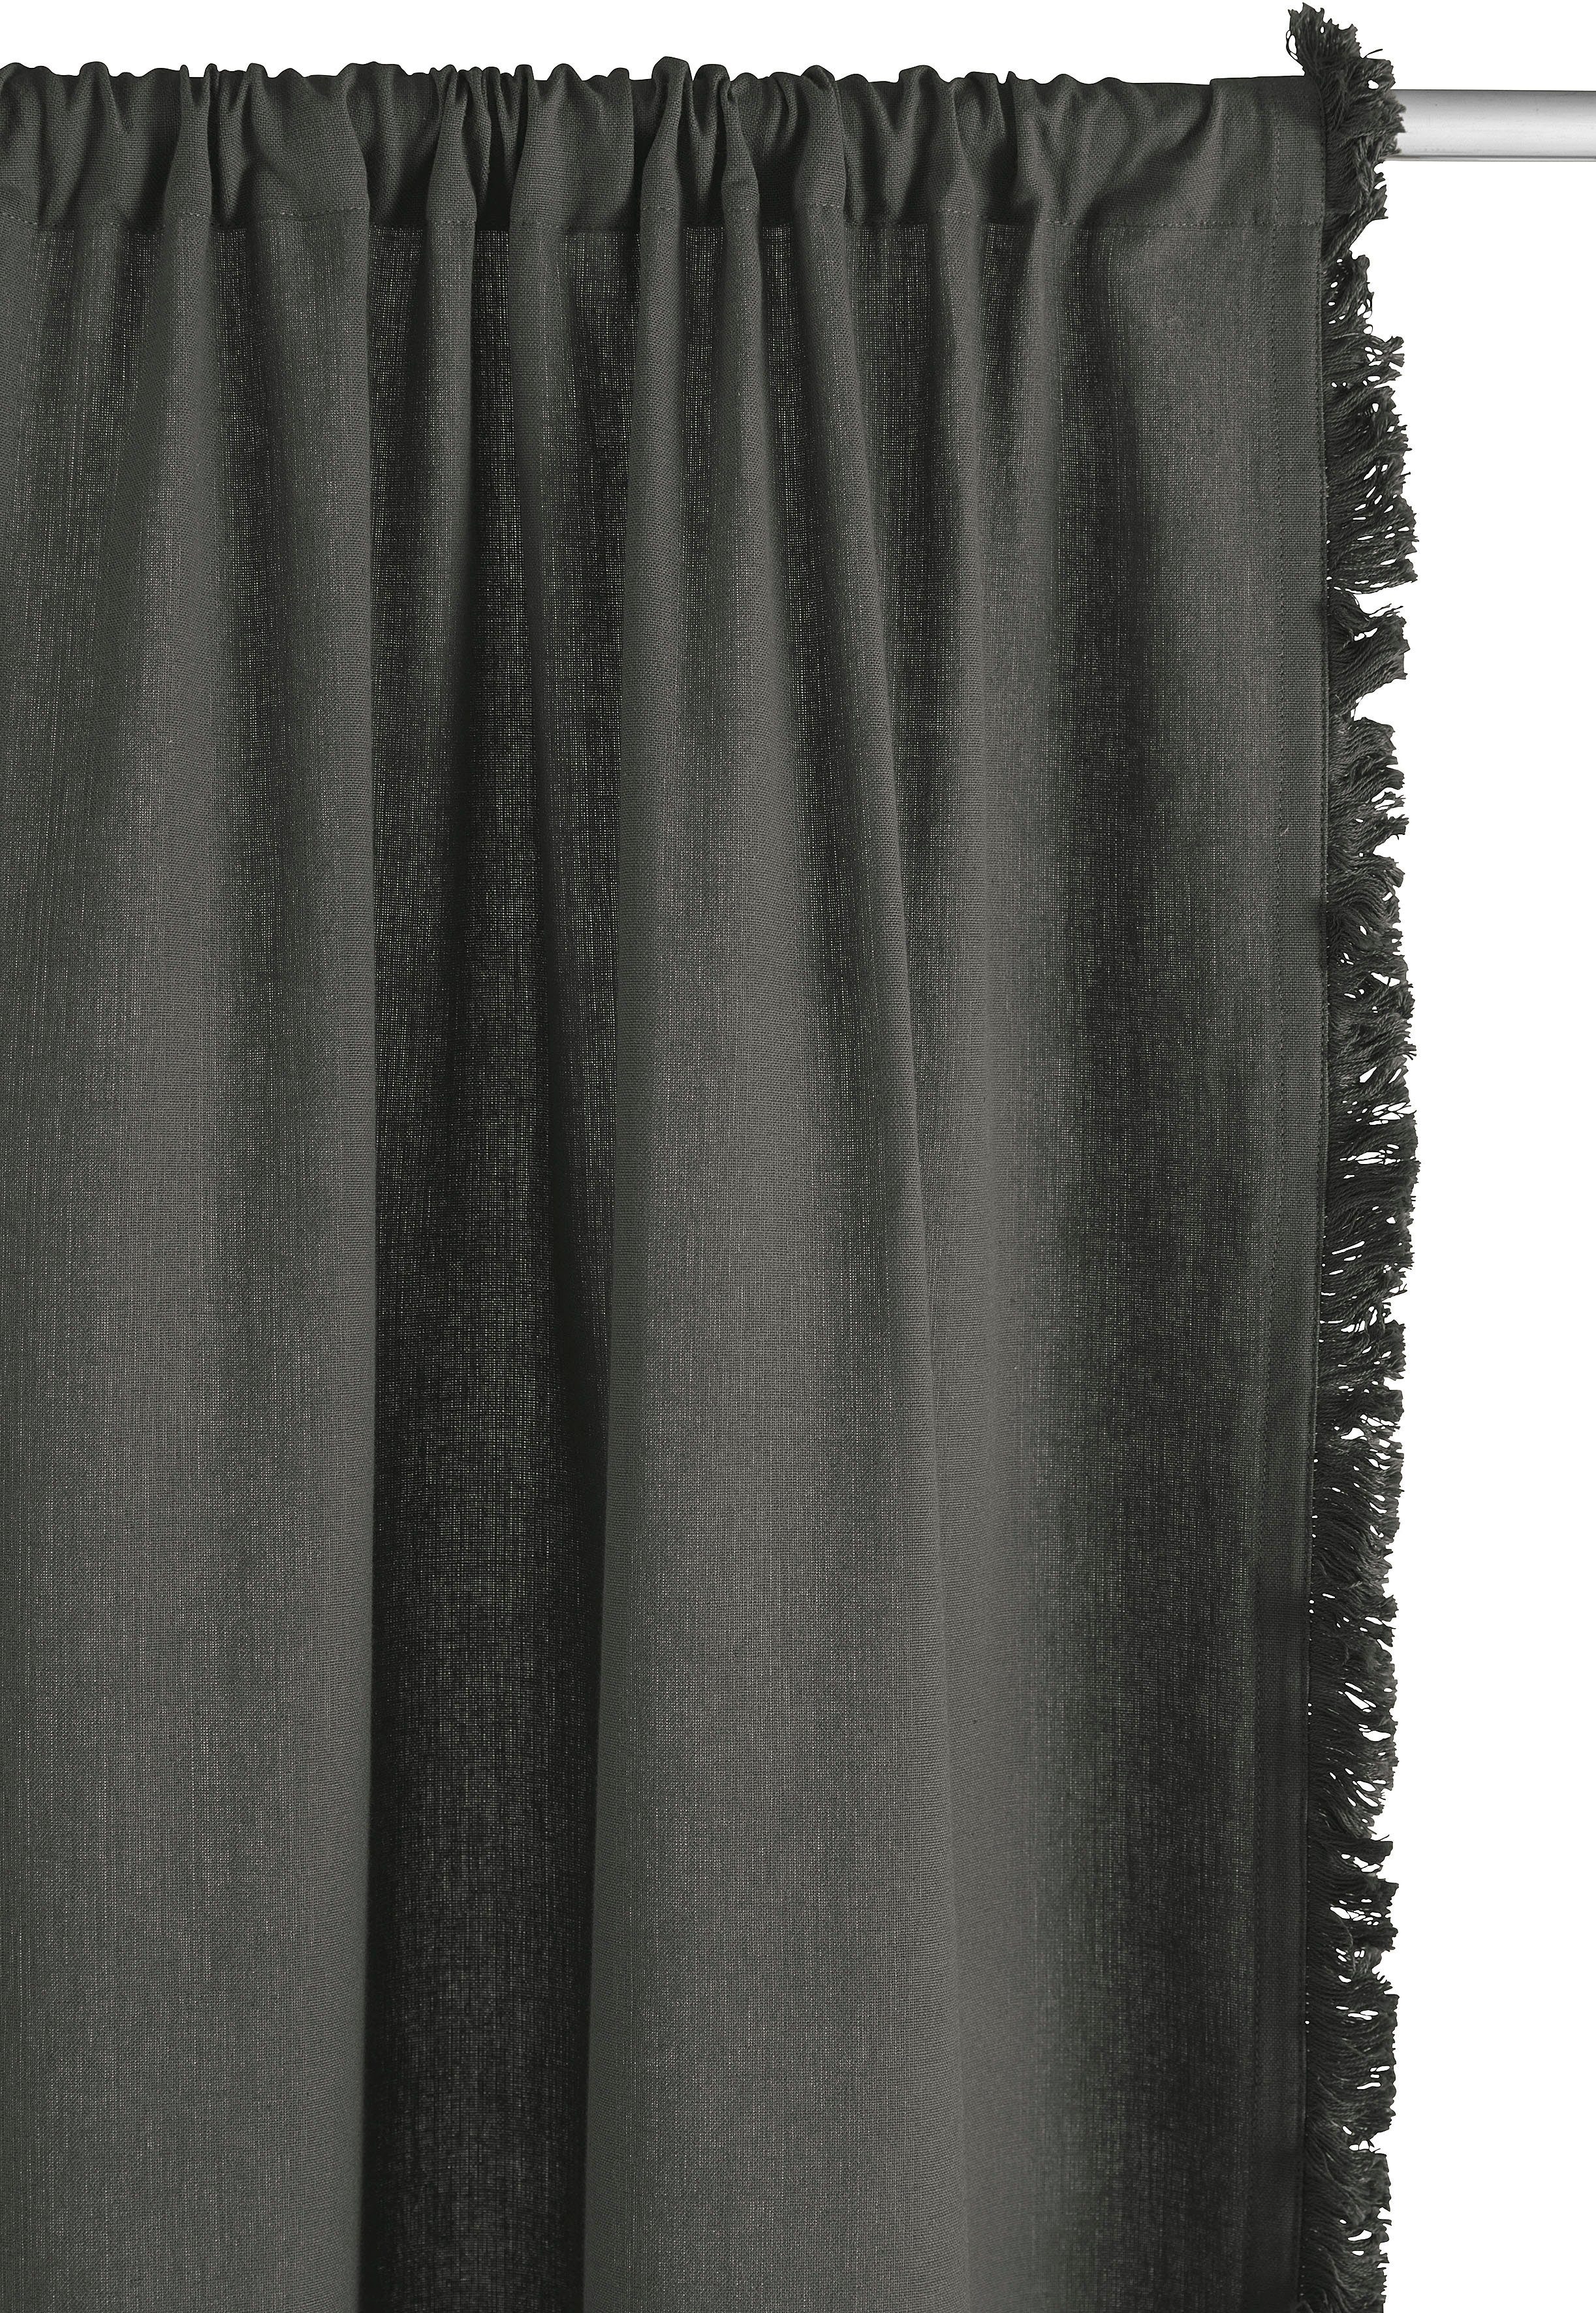 gewebt grau Fransenoptik, Stangendurchzug St), blickdicht, Baumwolloptik, (1 blickdicht, glatt, Timbers, Tennessee, Vorhang